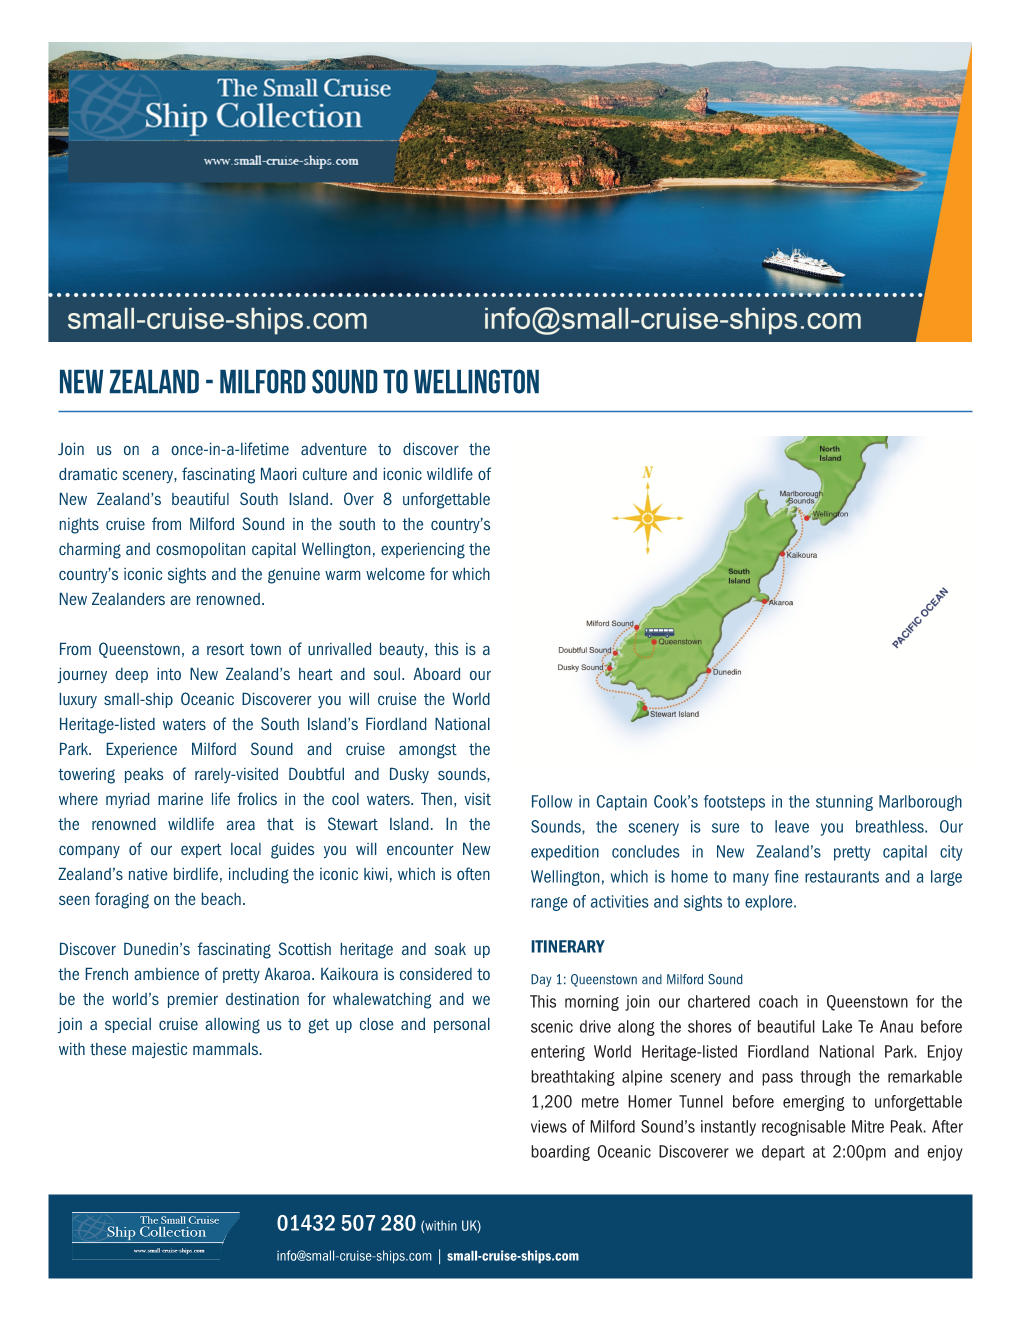 New Zealand - Milford Sound to Wellington